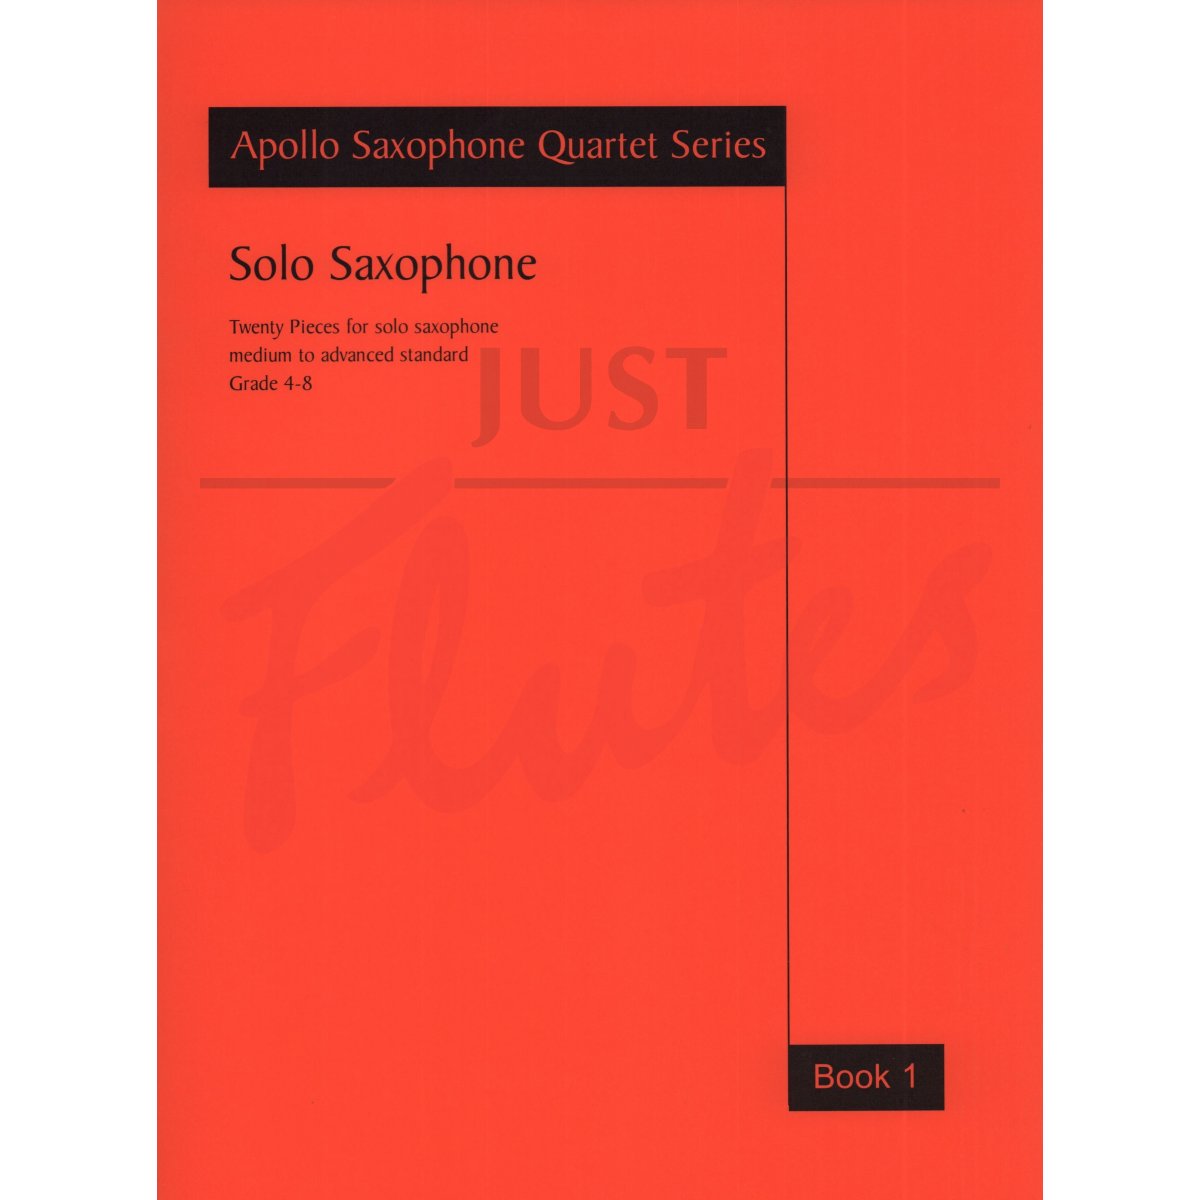 Solo Saxophone, Book 1